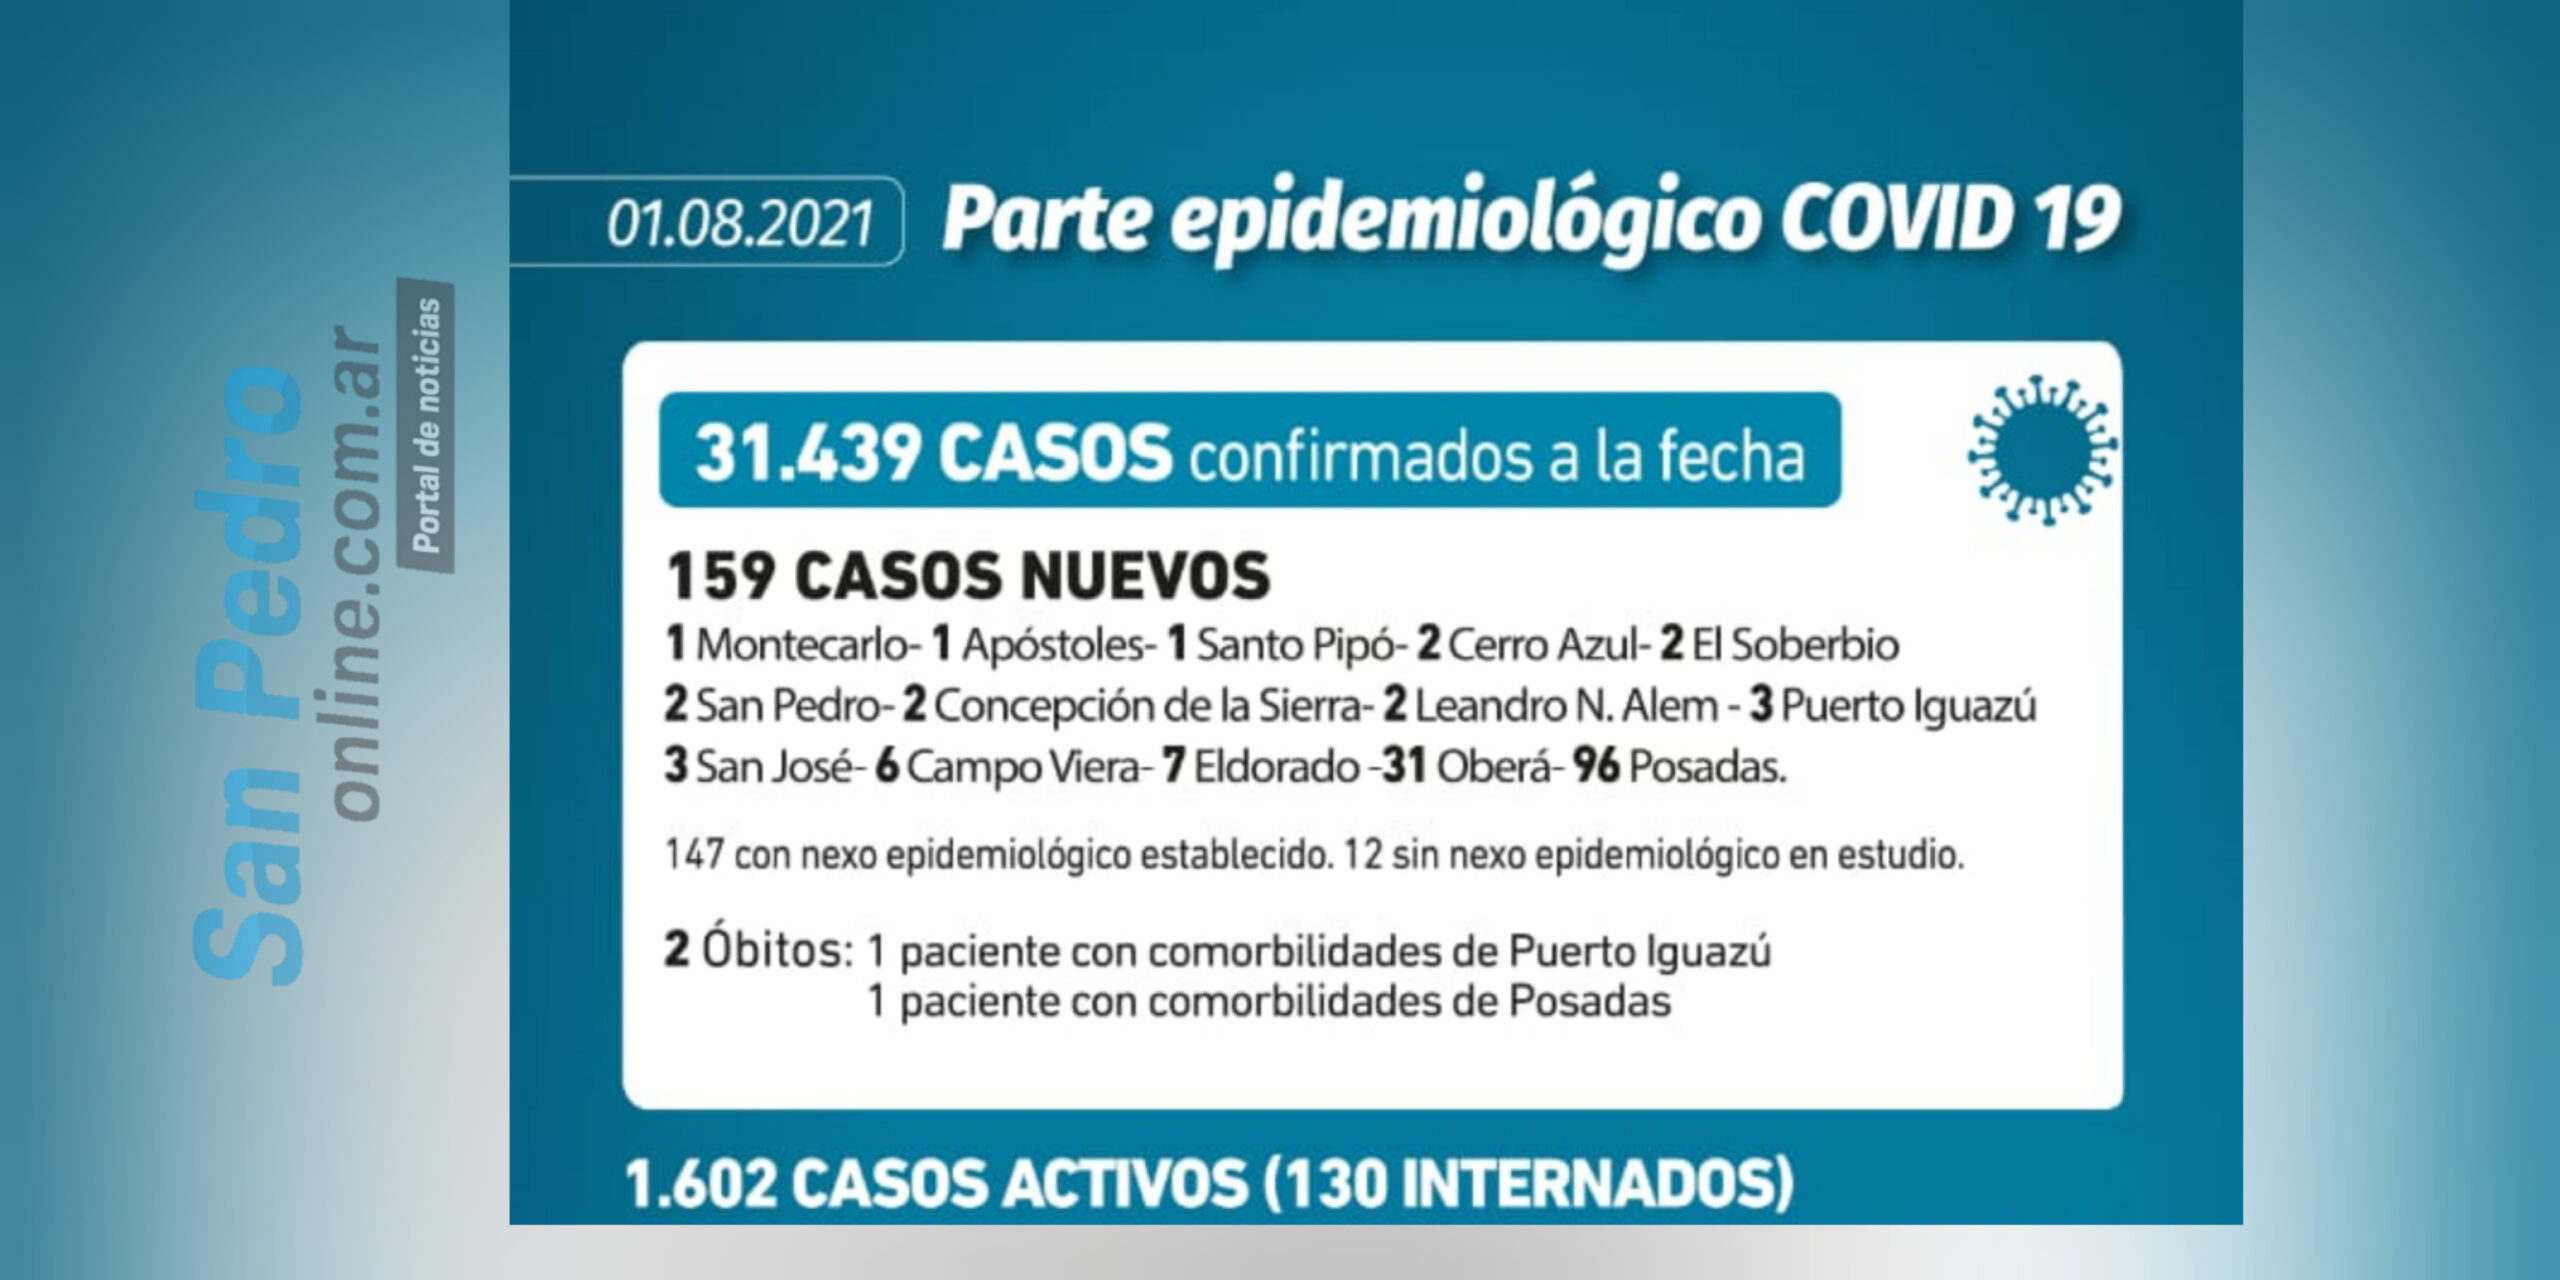 CORONAVIRUS: 2 NUEVOS CONTAGIOS EN SAN PEDRO (01/08/21)